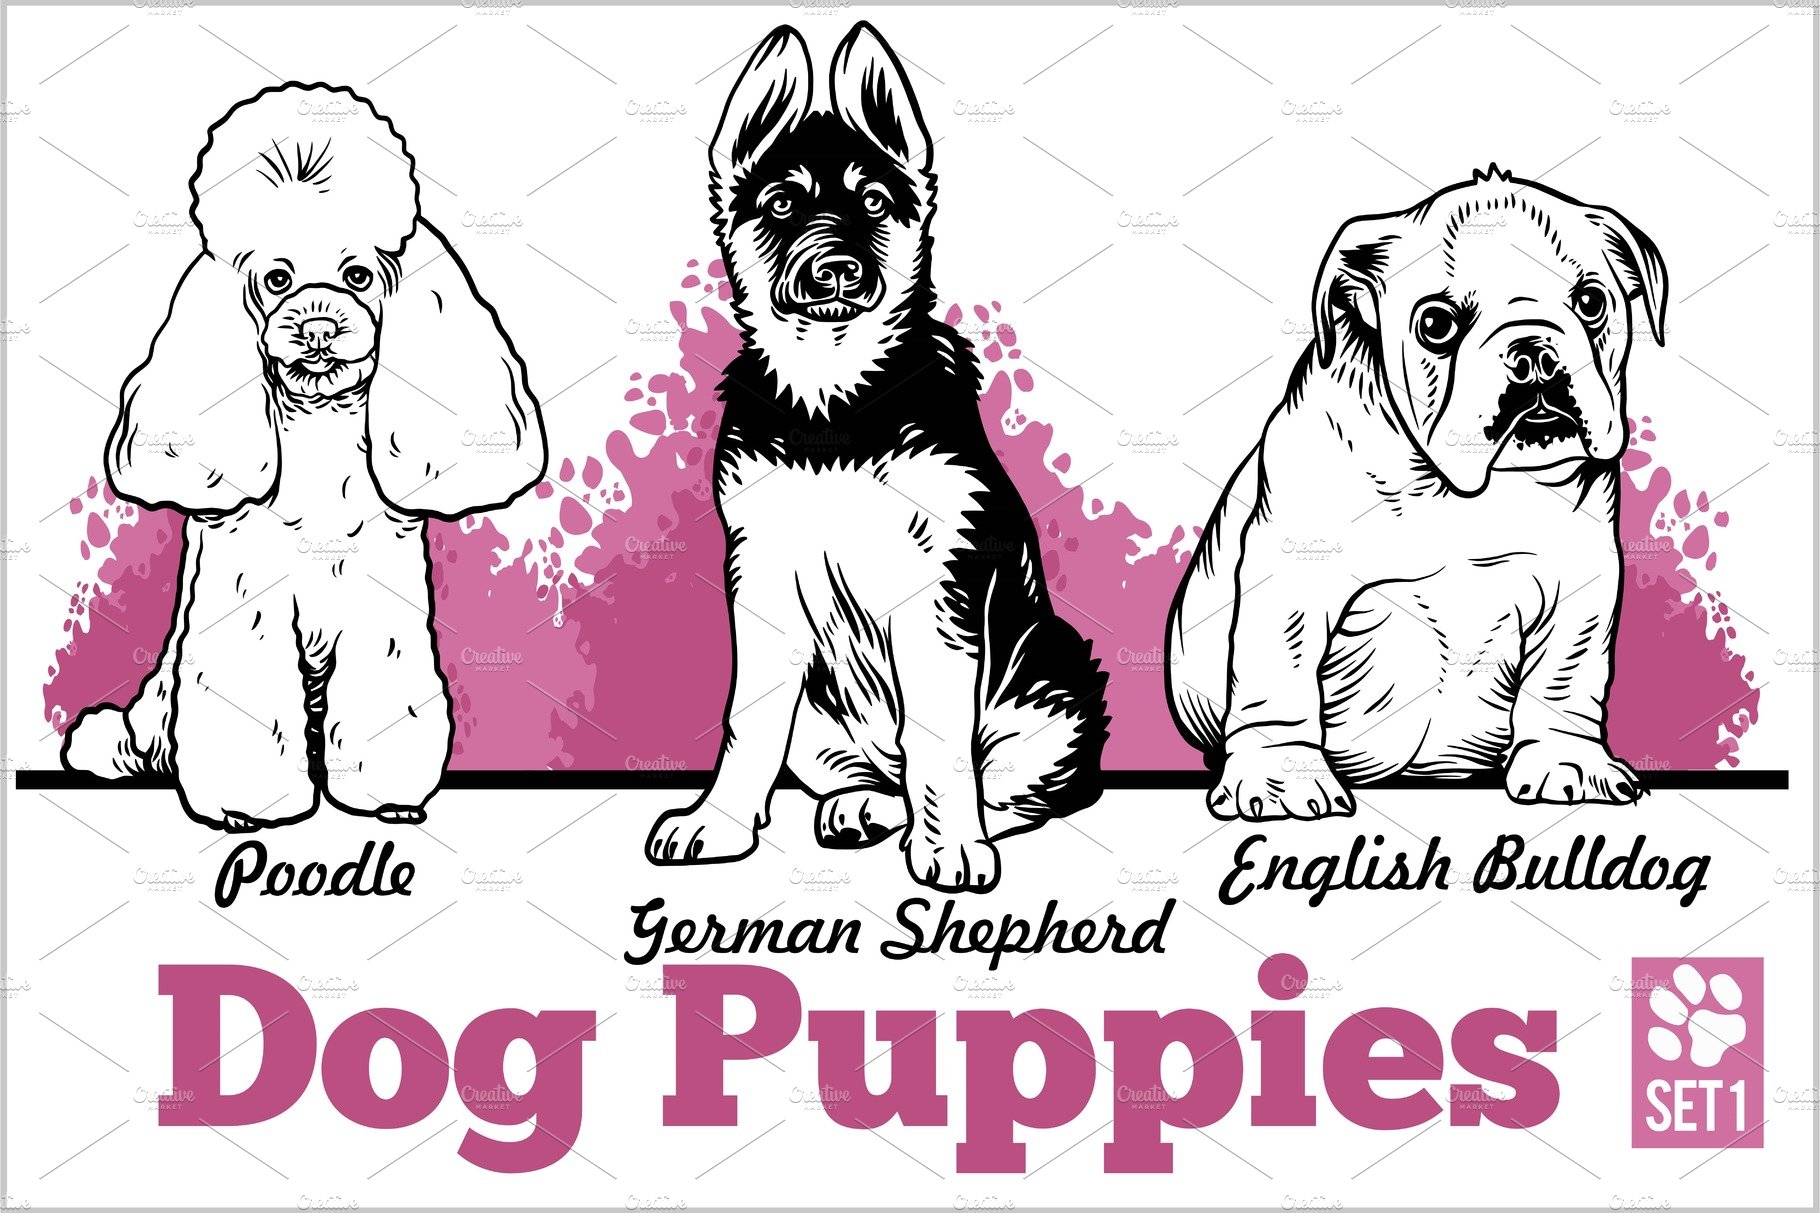 English Bulldog, Poodle and German cover image.